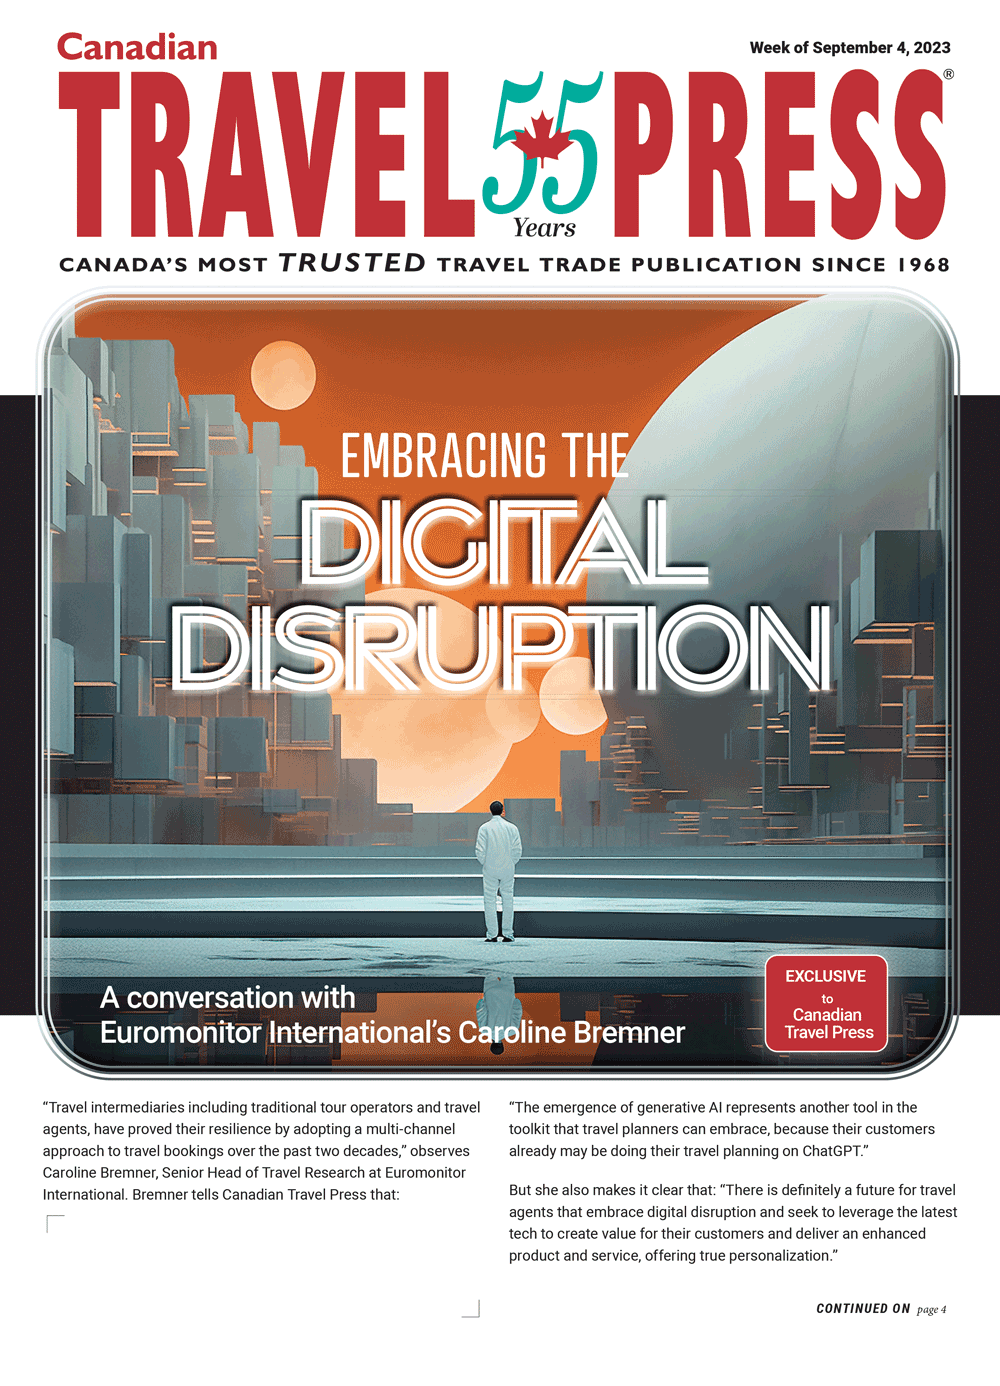 Embracing the digital disruption